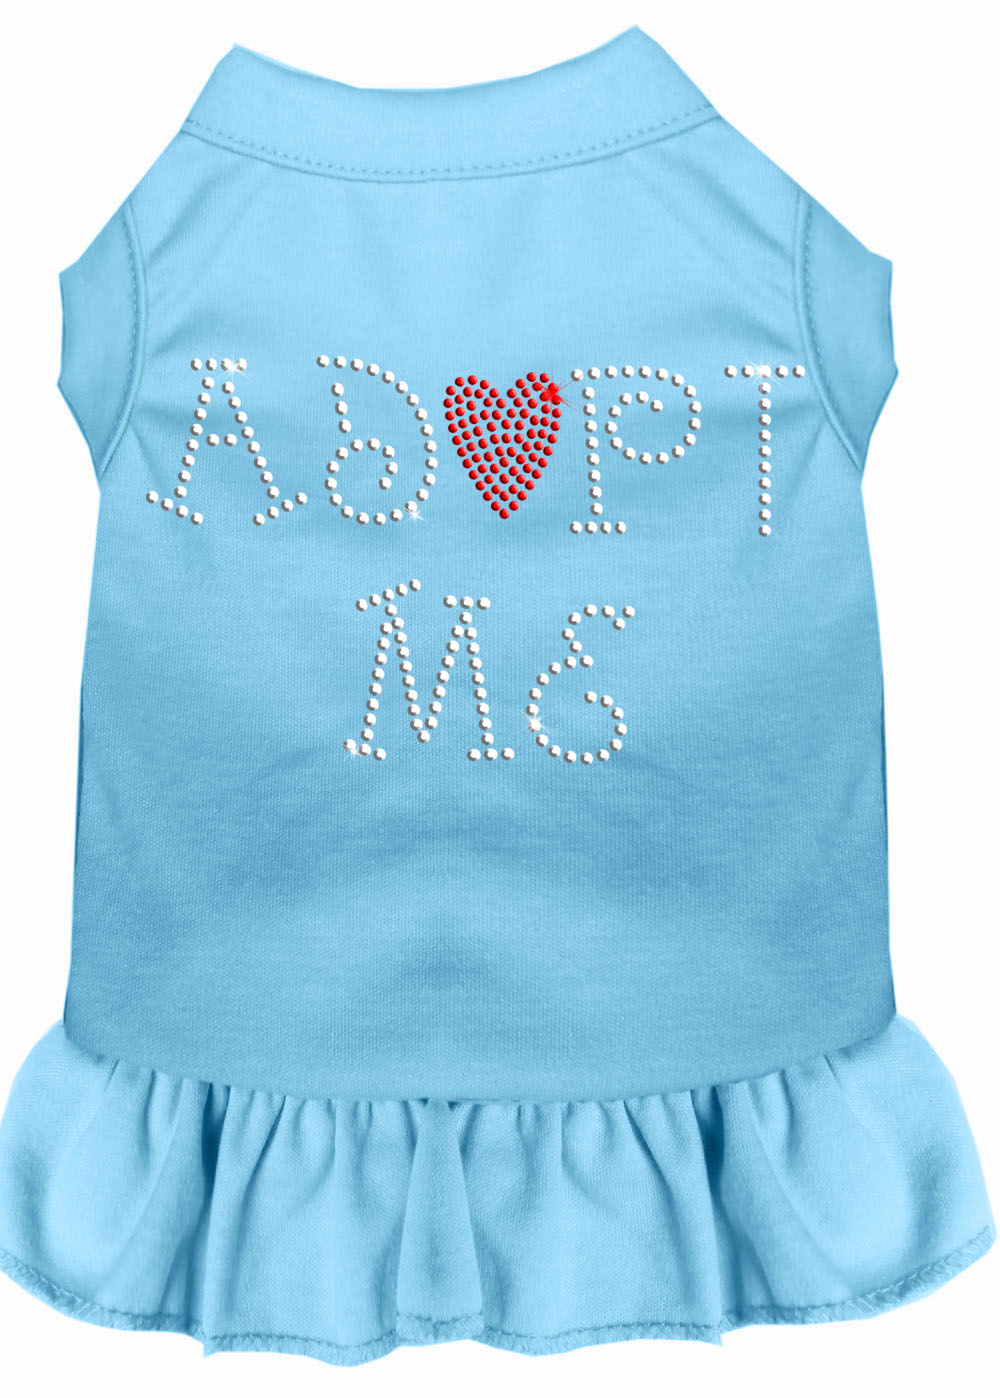 Adopt Me Rhinestone Dress Baby Blue 4X